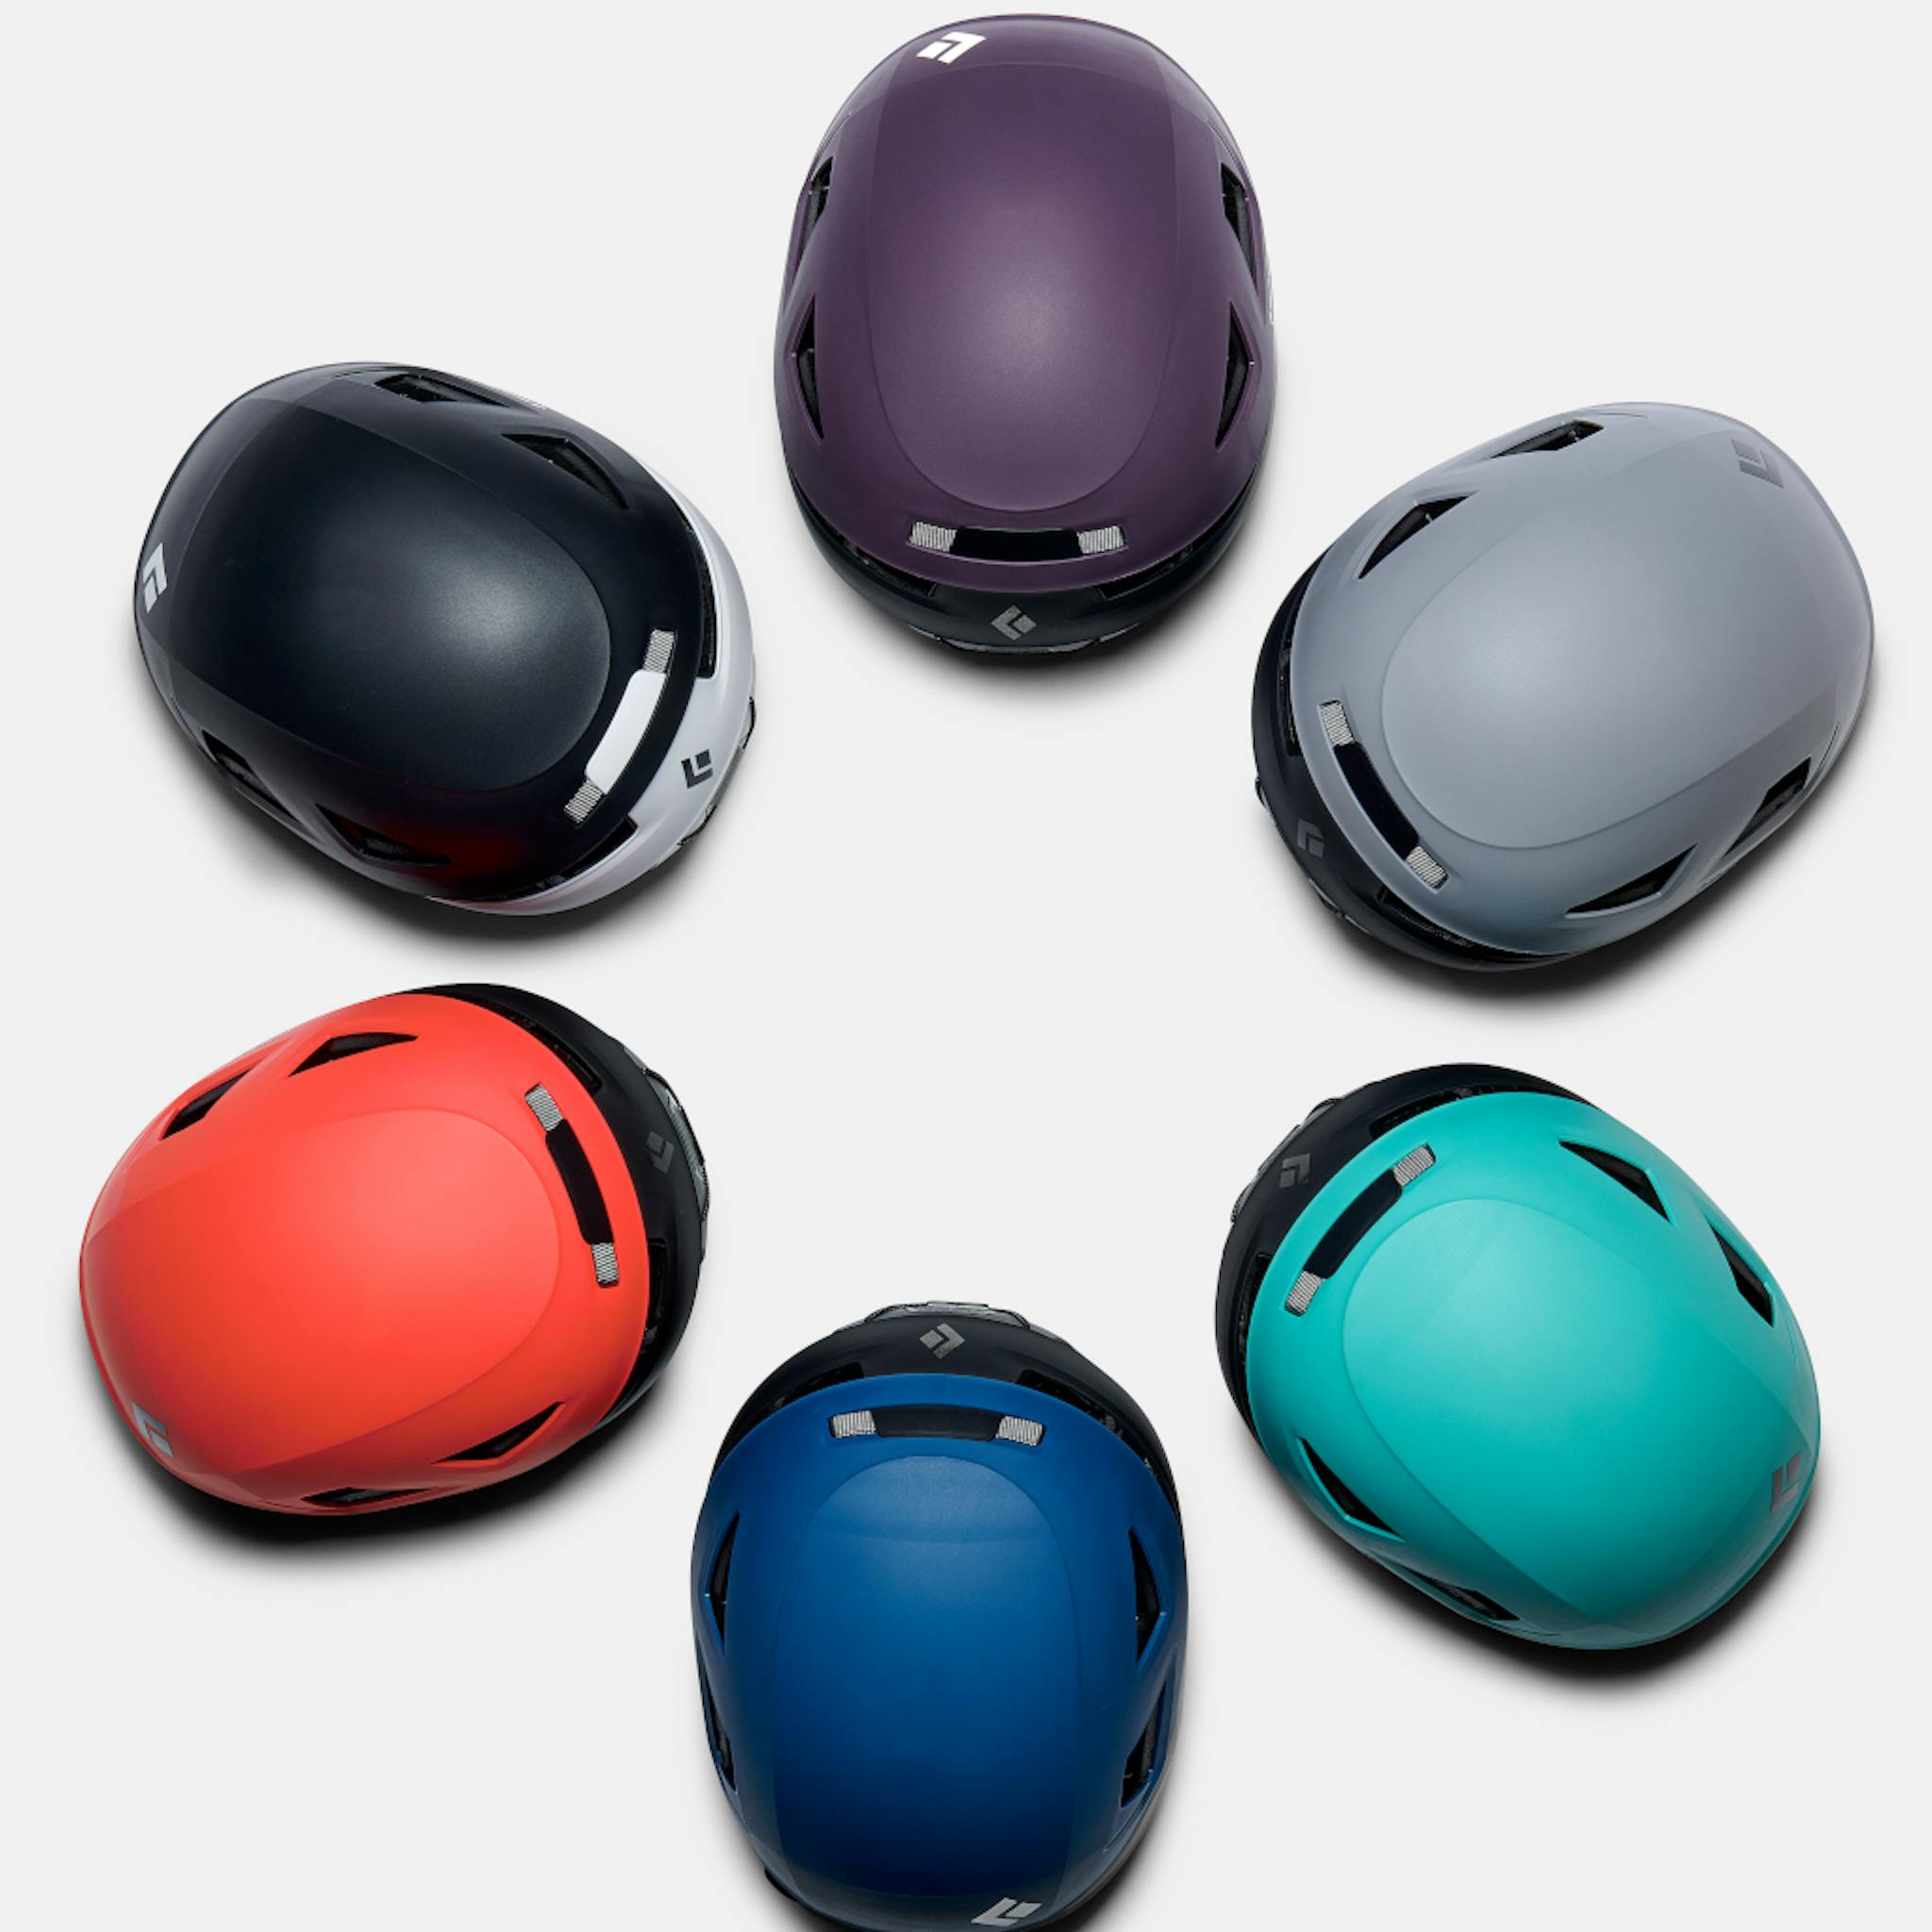 5 Capitan helmets in multiple colors arranged in a flower circle pattern.